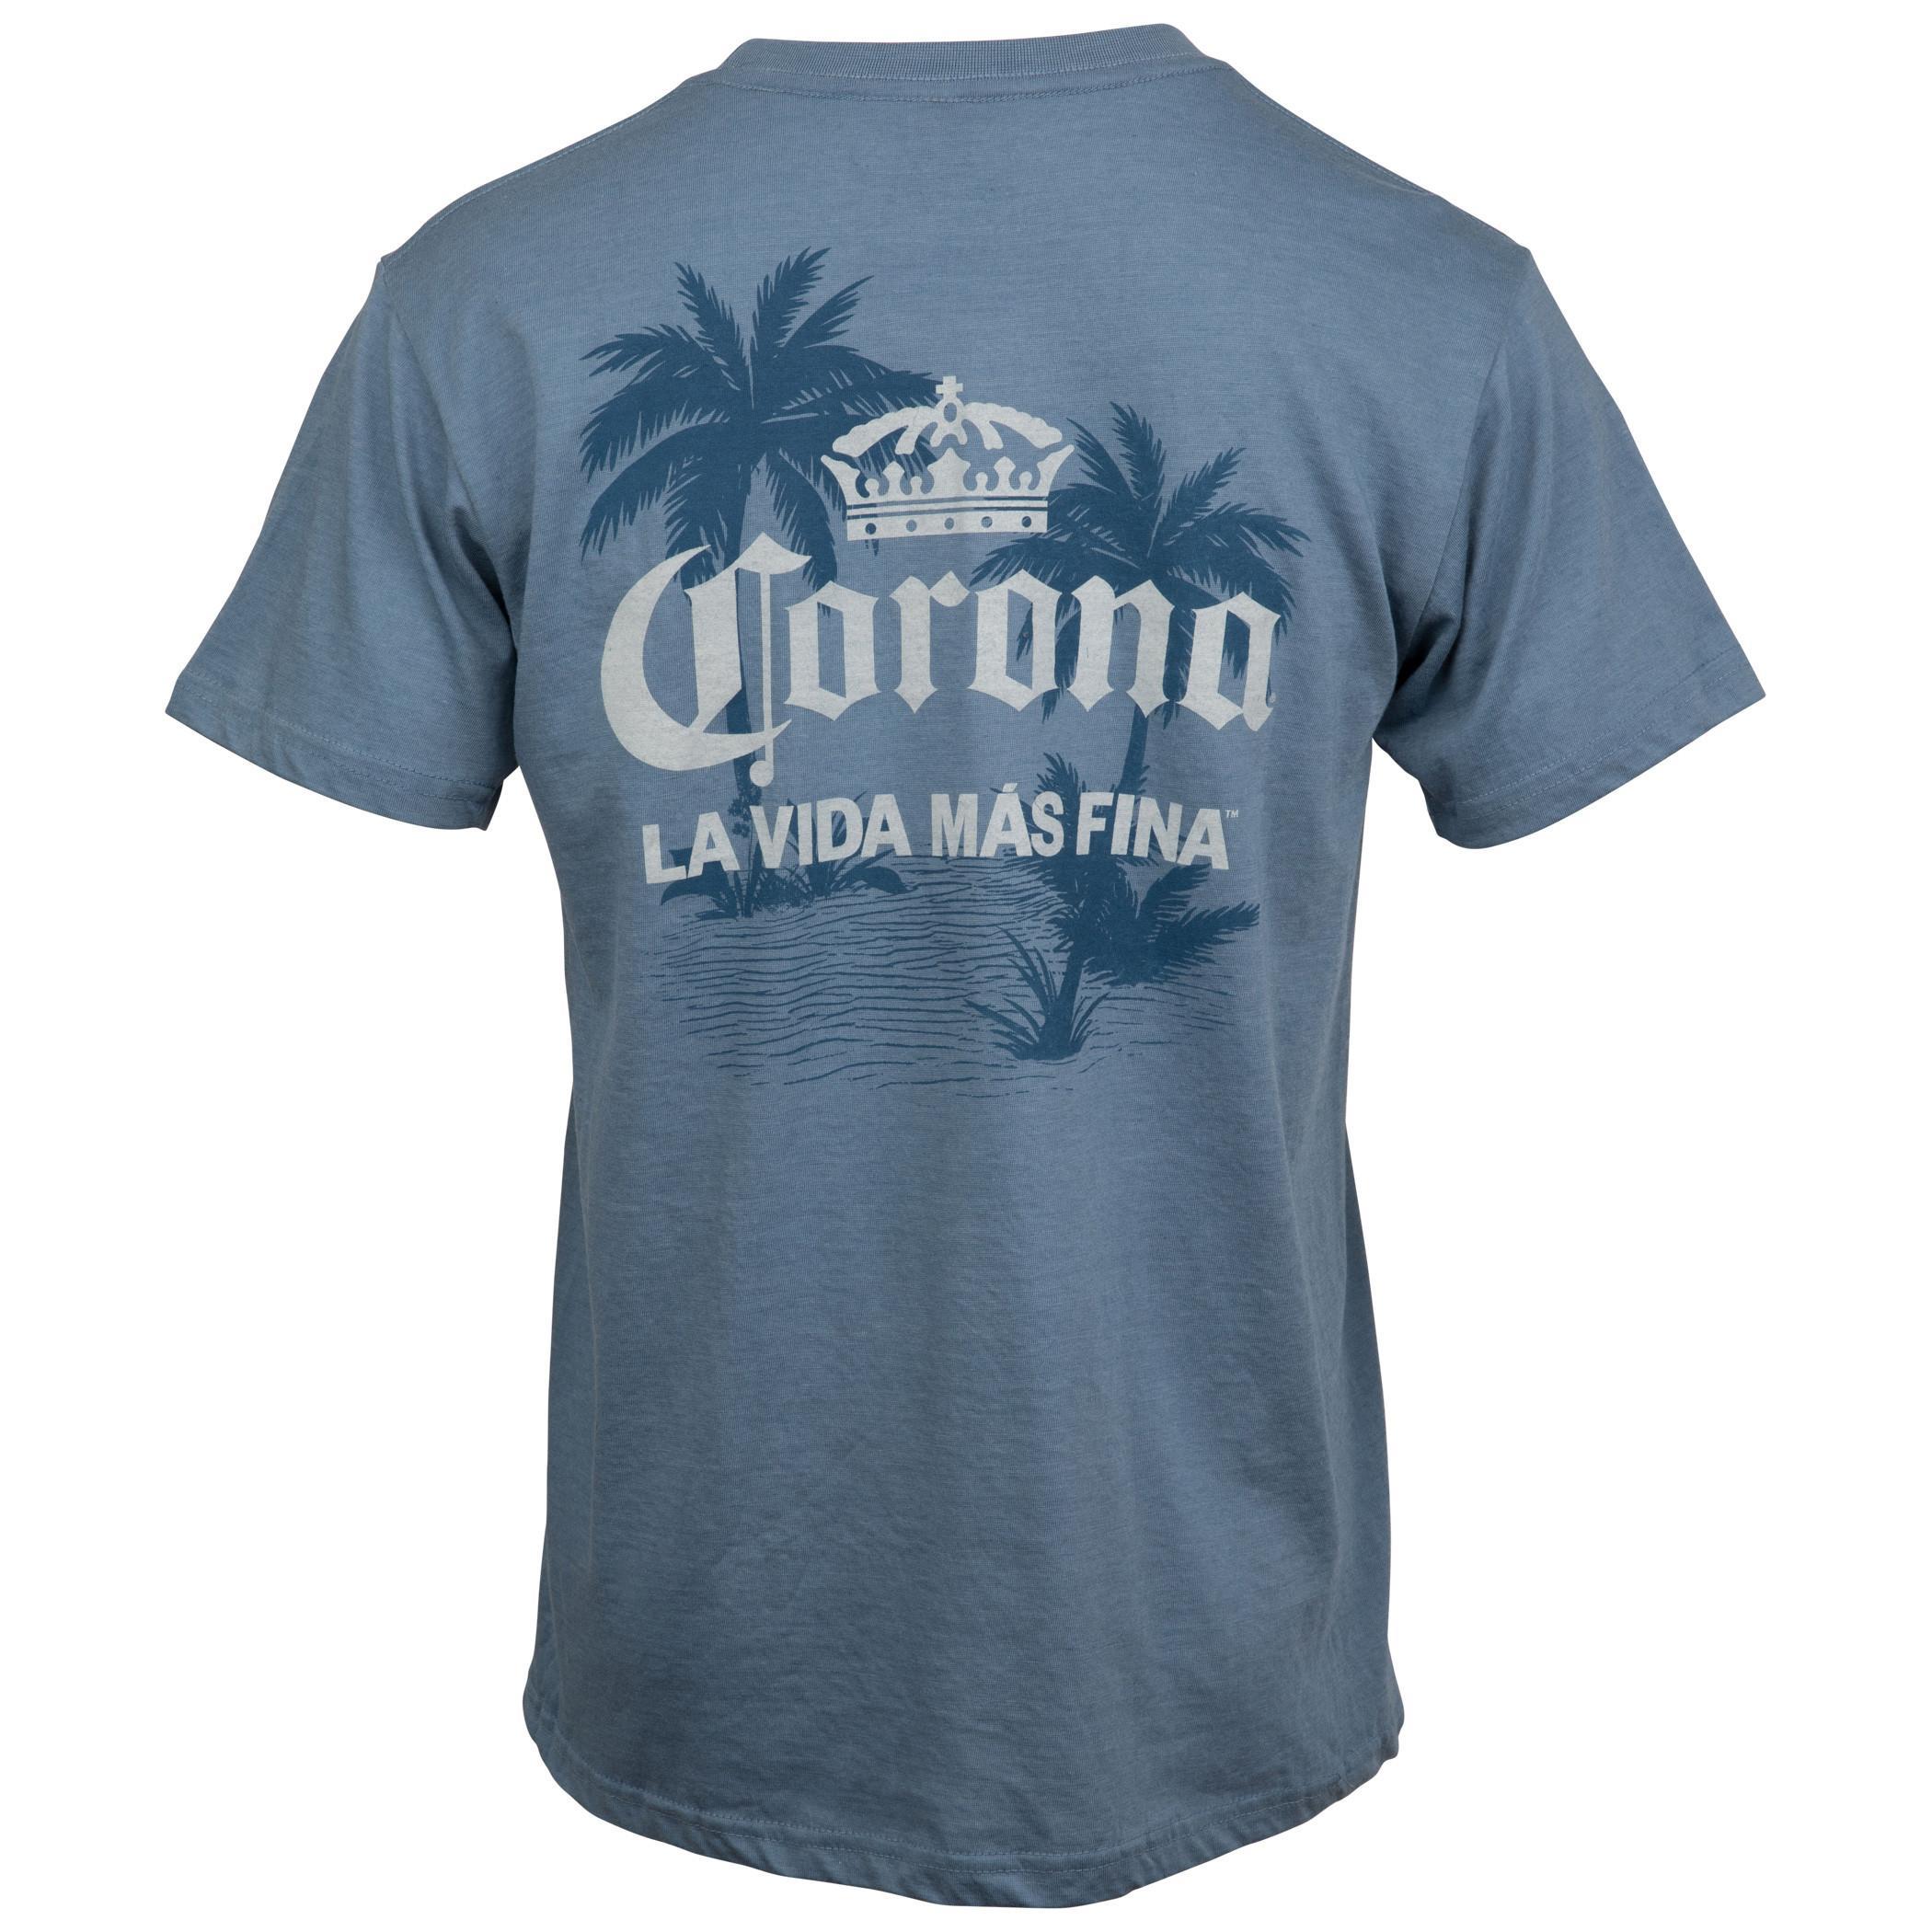 Corona Extra La Vida Mas Fina Palm Trees Front and Back Print T-Shirt 2XLarge